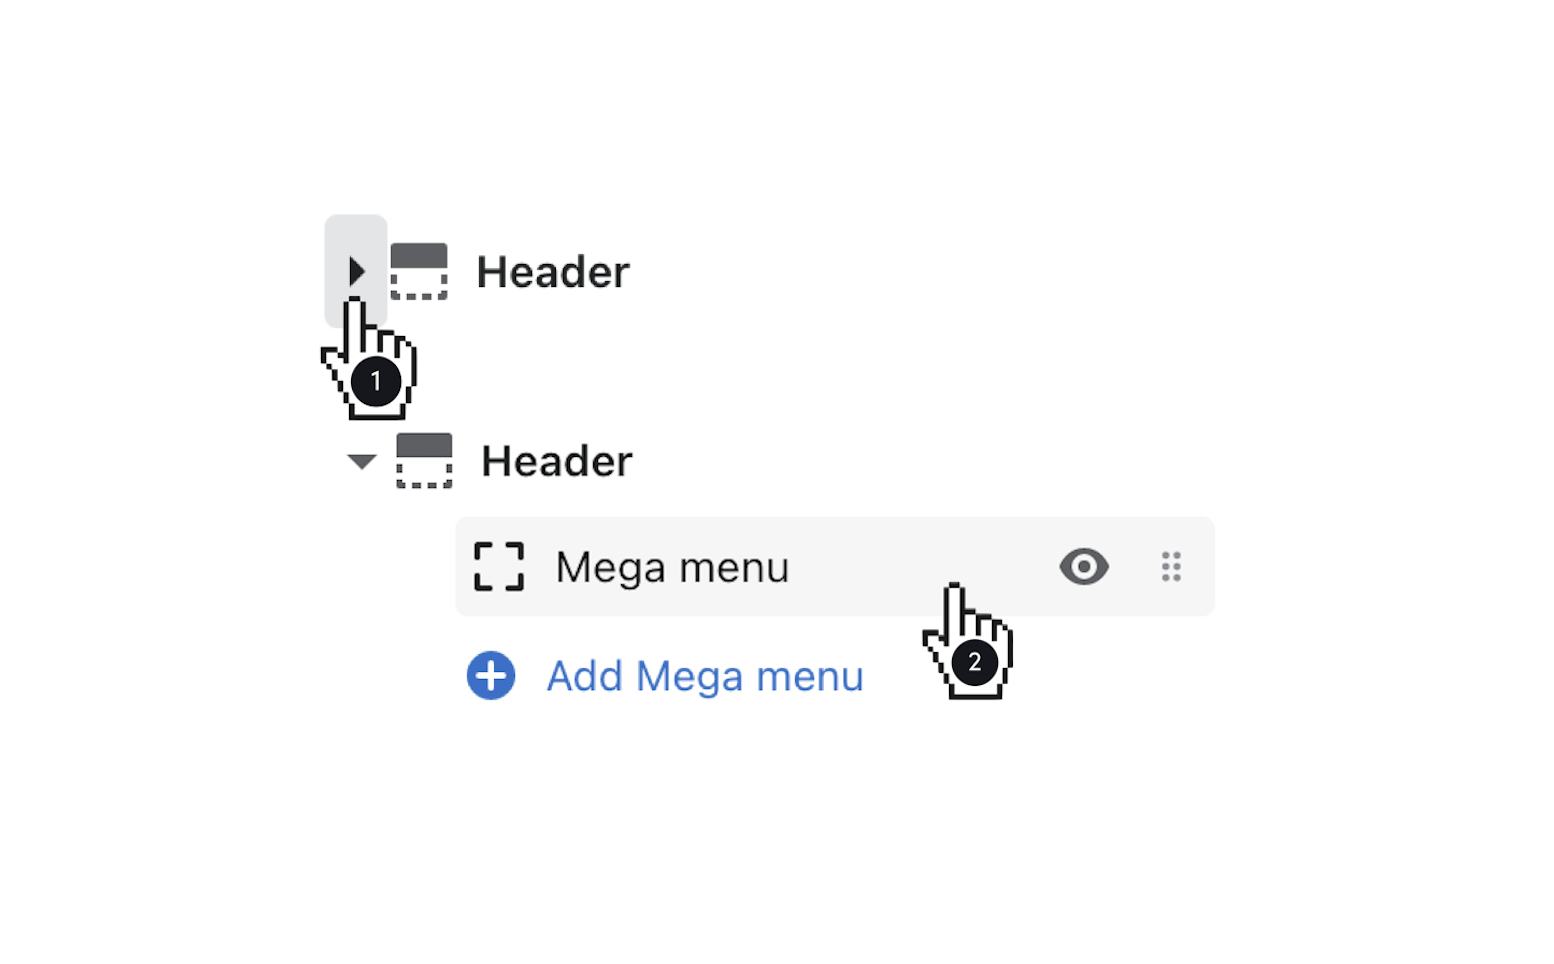 click toggle to left of header to reveal mega menu blocks